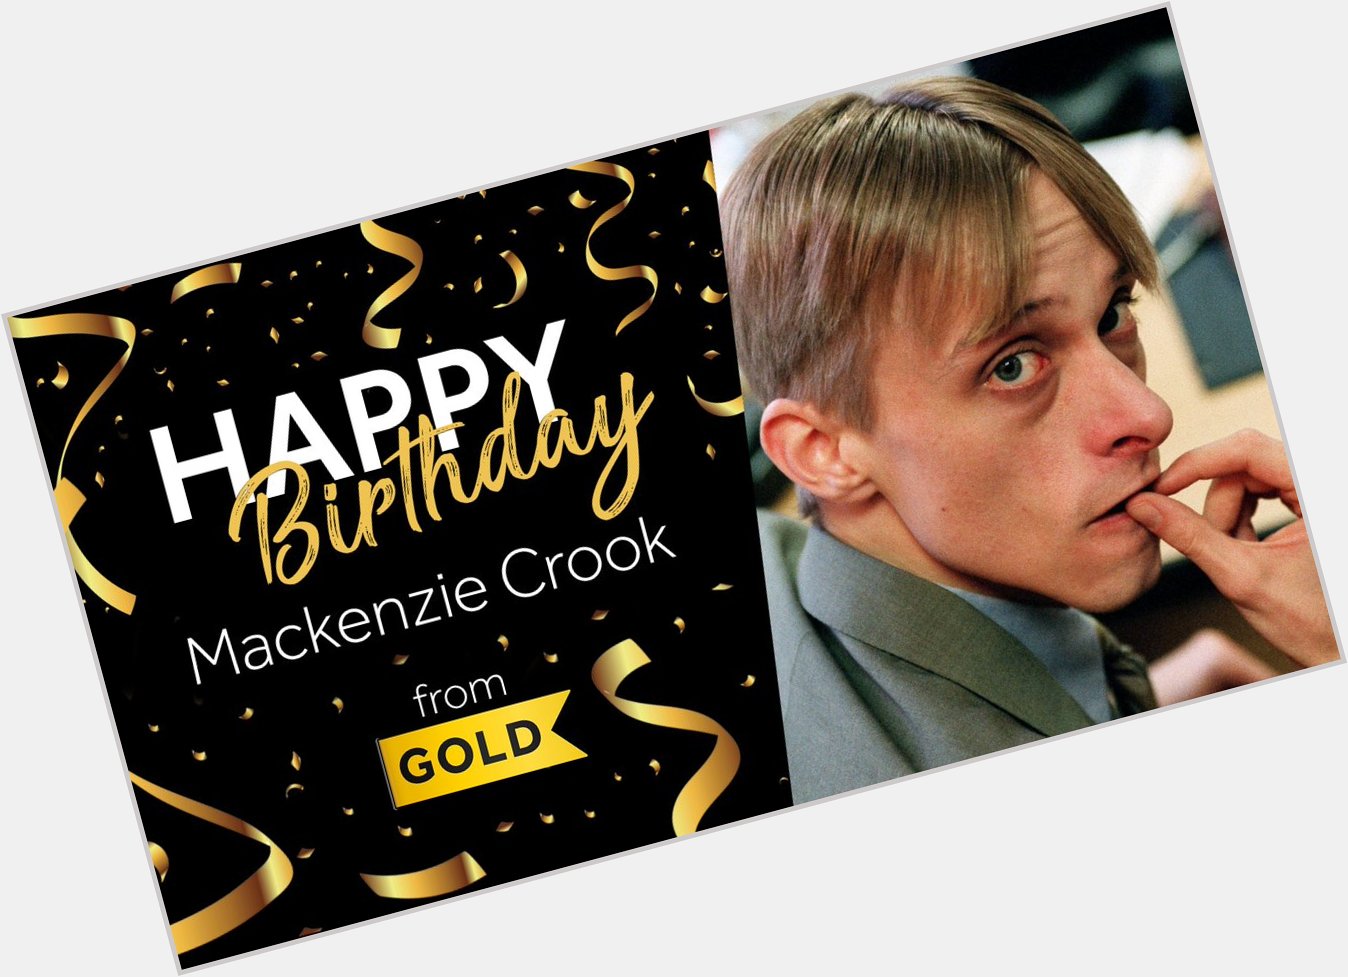 Oh how we miss Gareth in Happy Birthday Mackenzie Crook! 